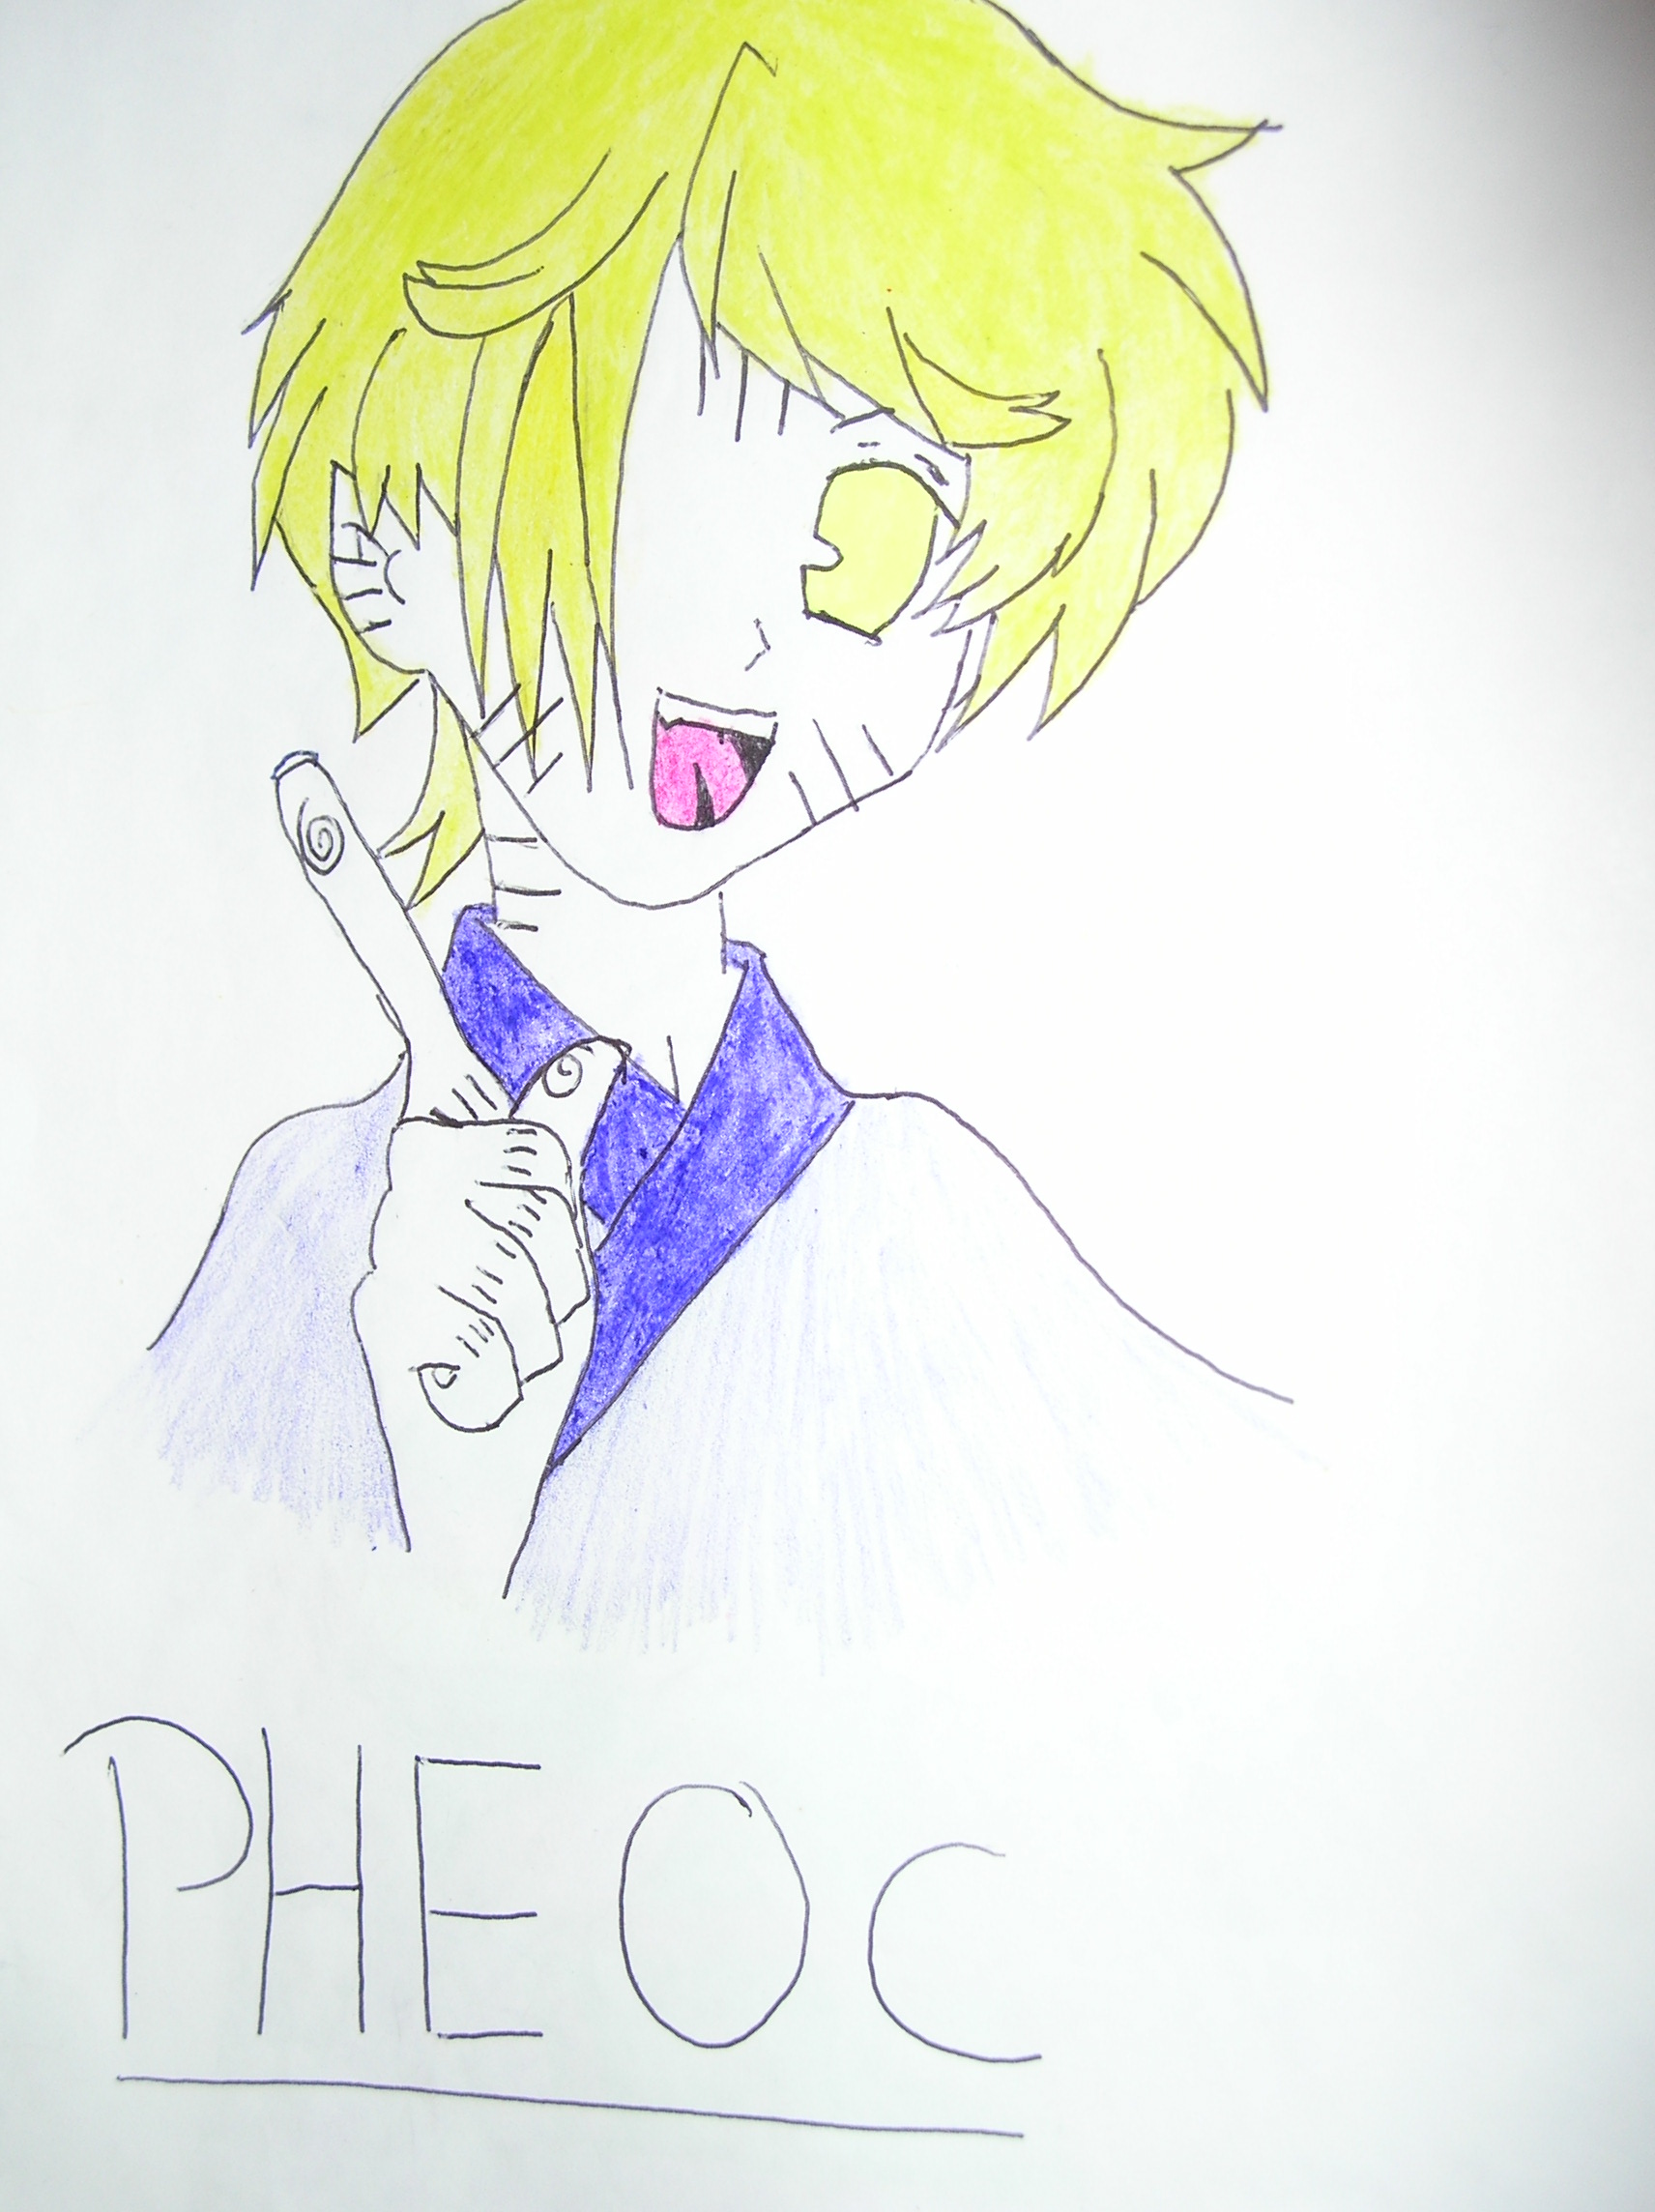 Pheoc by ShadowGuarderForever